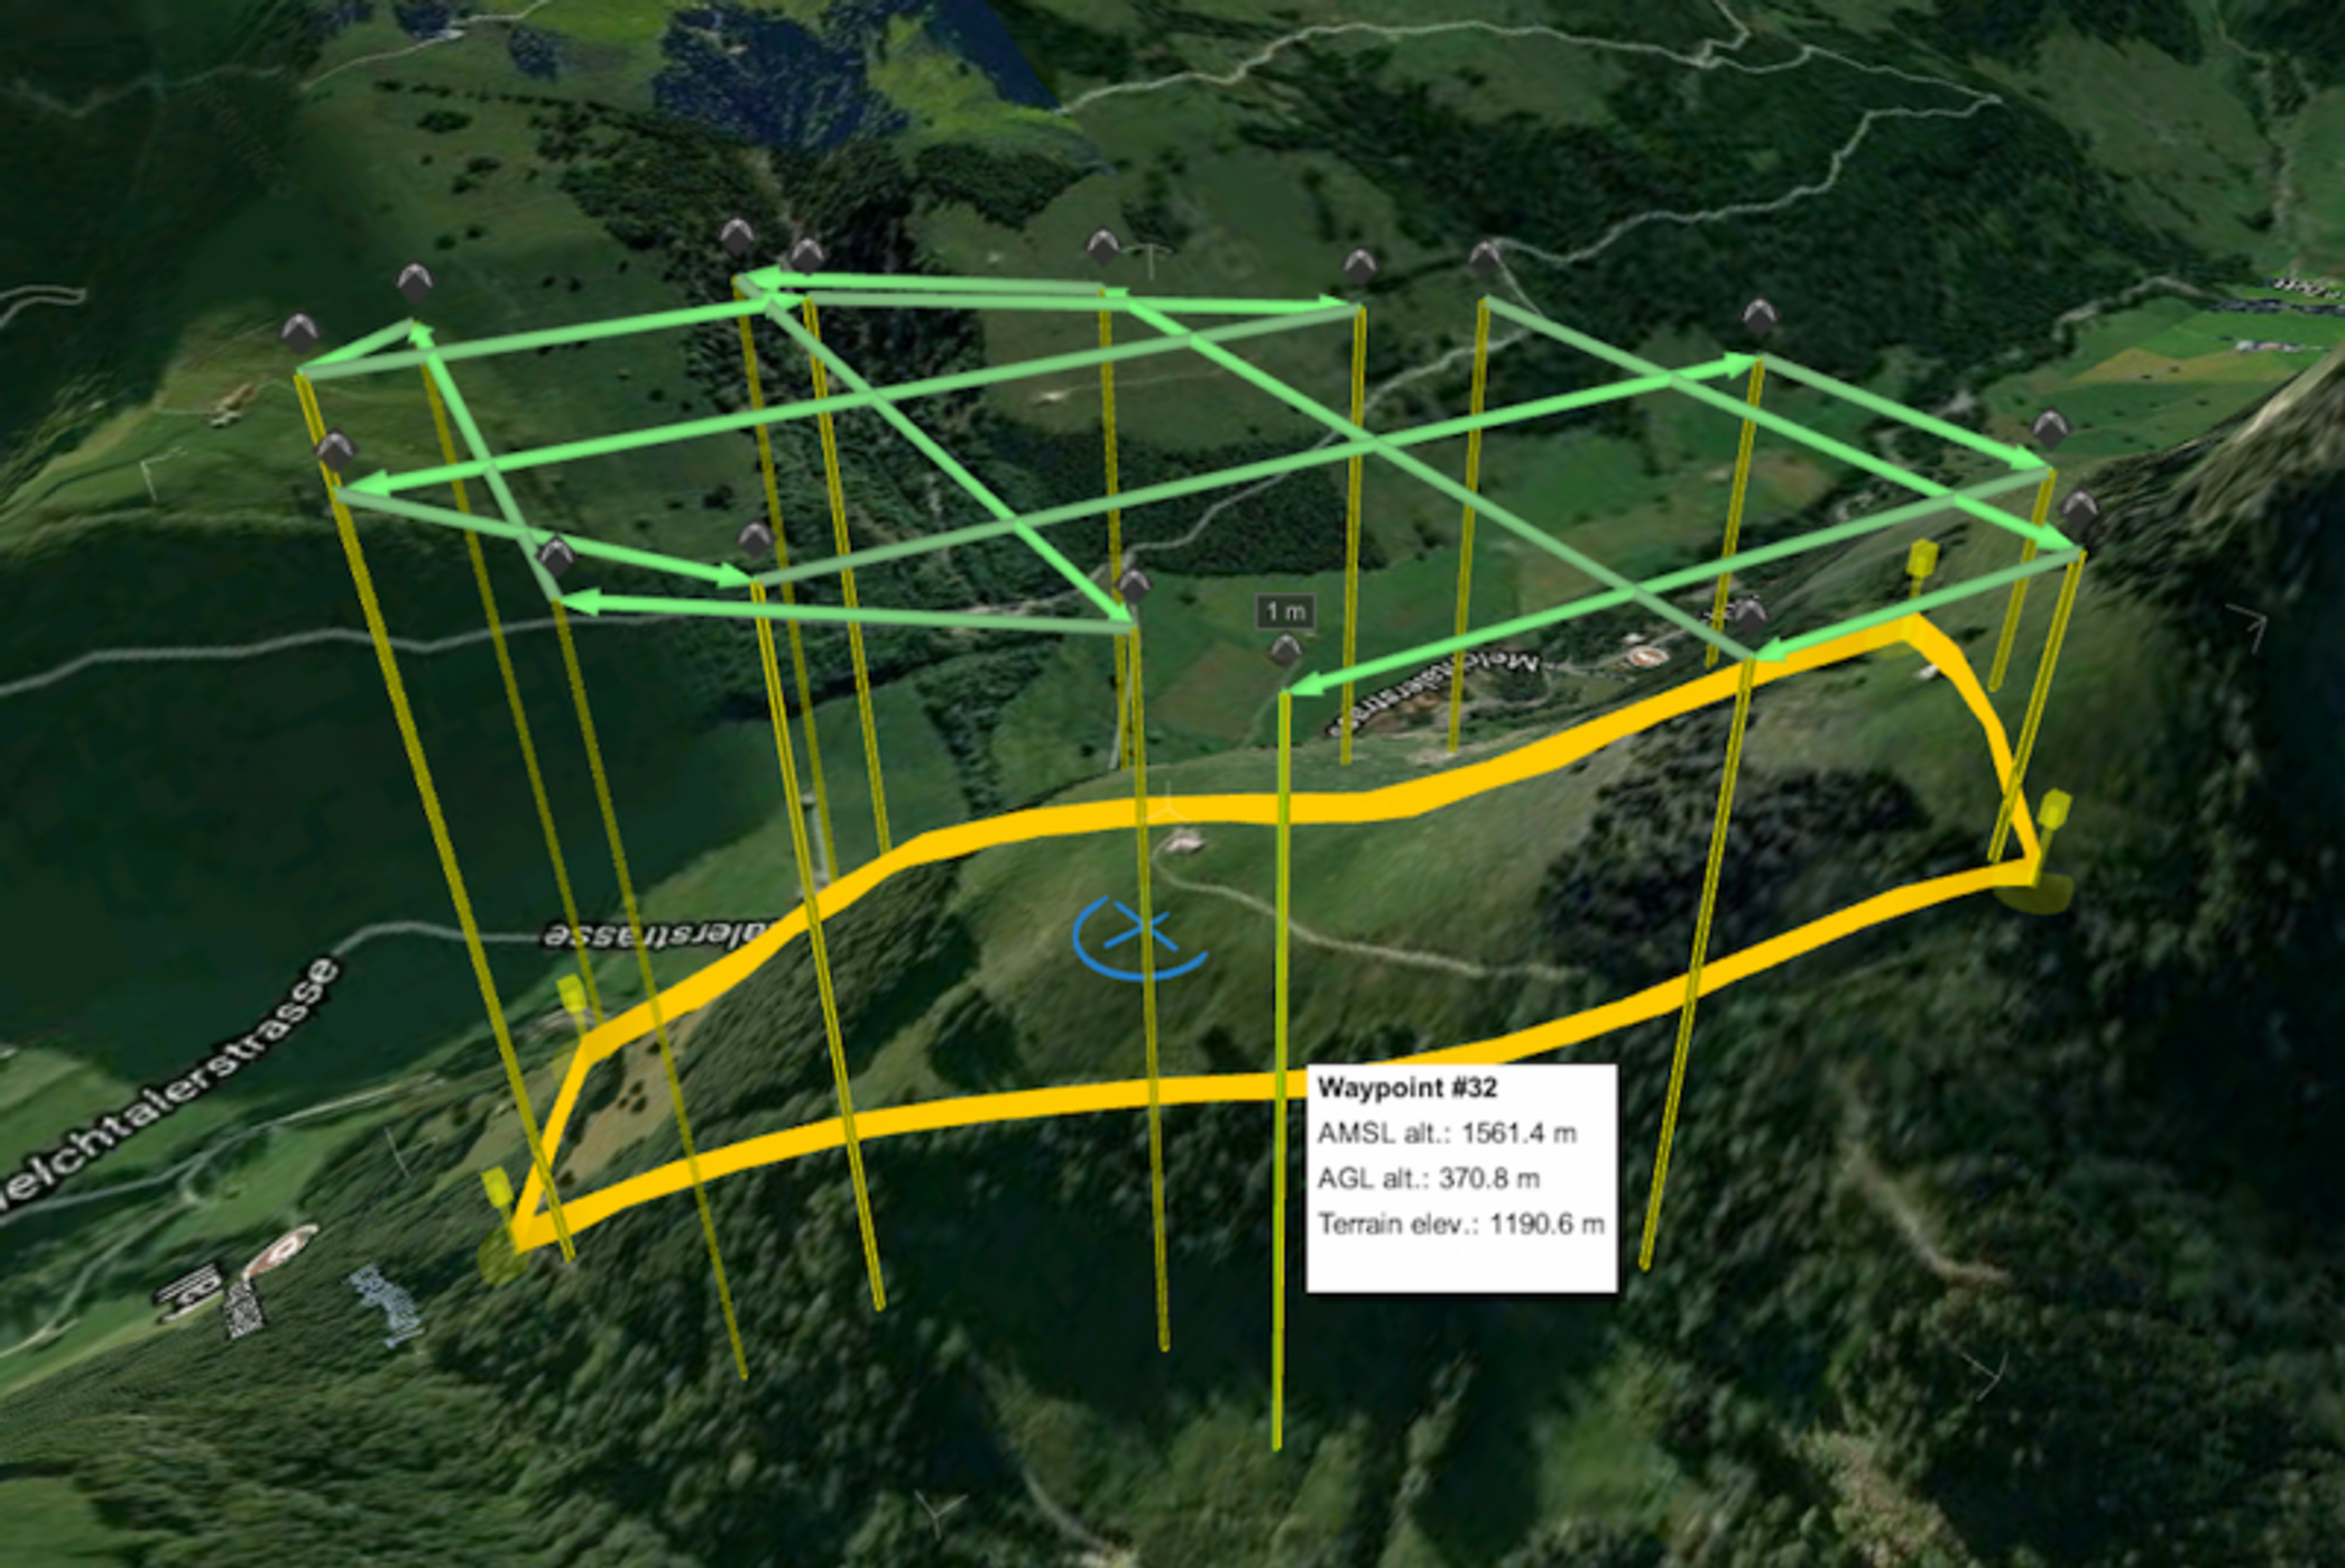 Drone-based terrain analysis